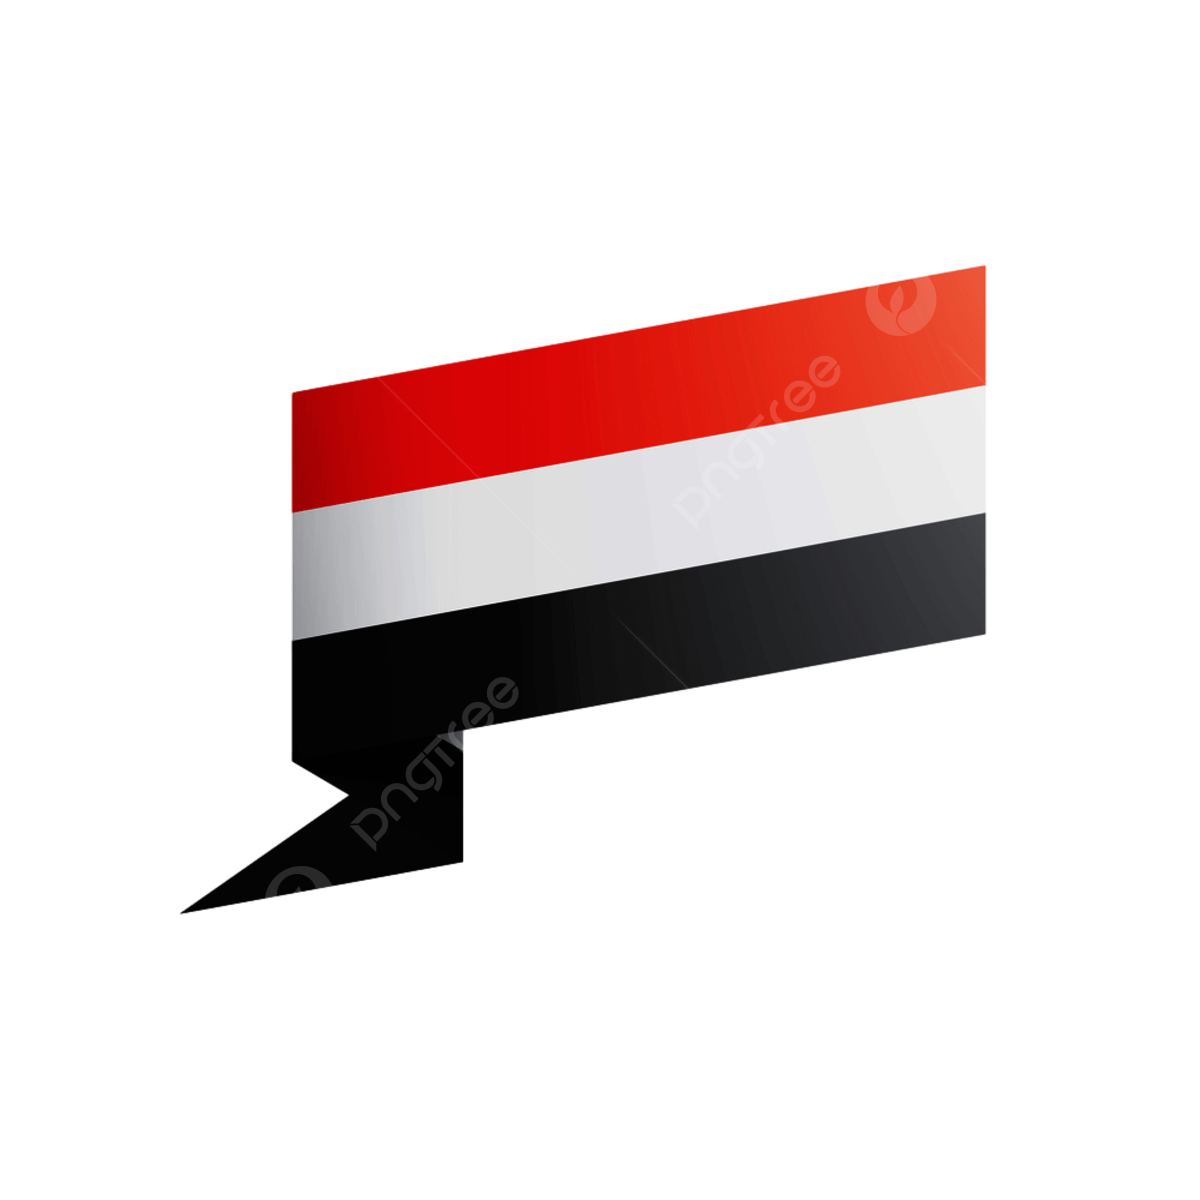 Yemen flag vector hd images yemeni flag yemen icon pin celebration d black png image for free download